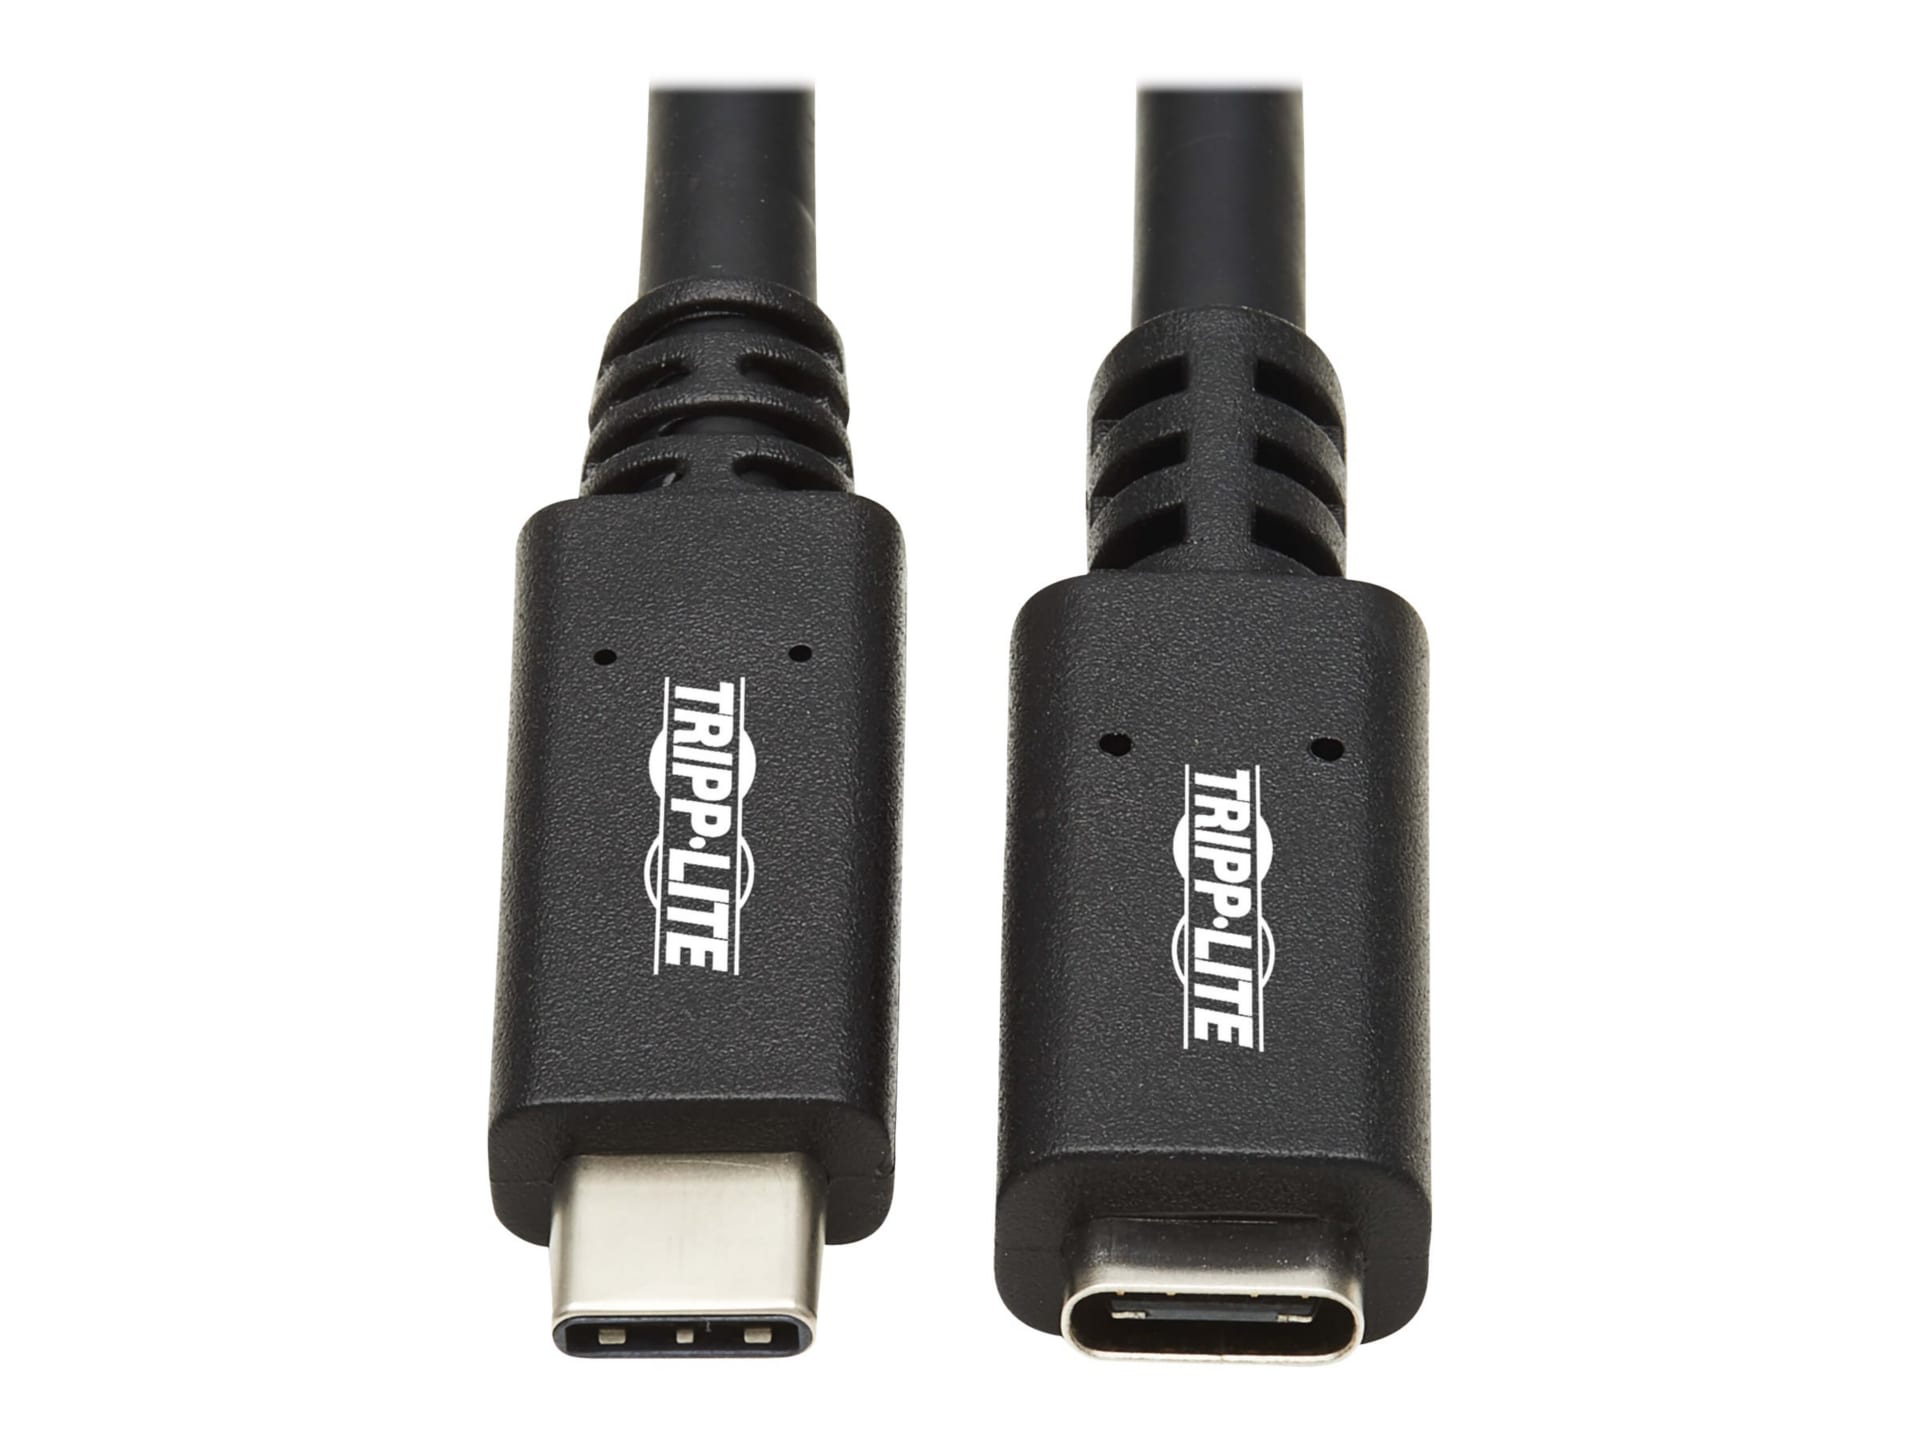 USB 3.2 USB-C to USB-C Cable| WyreStorm